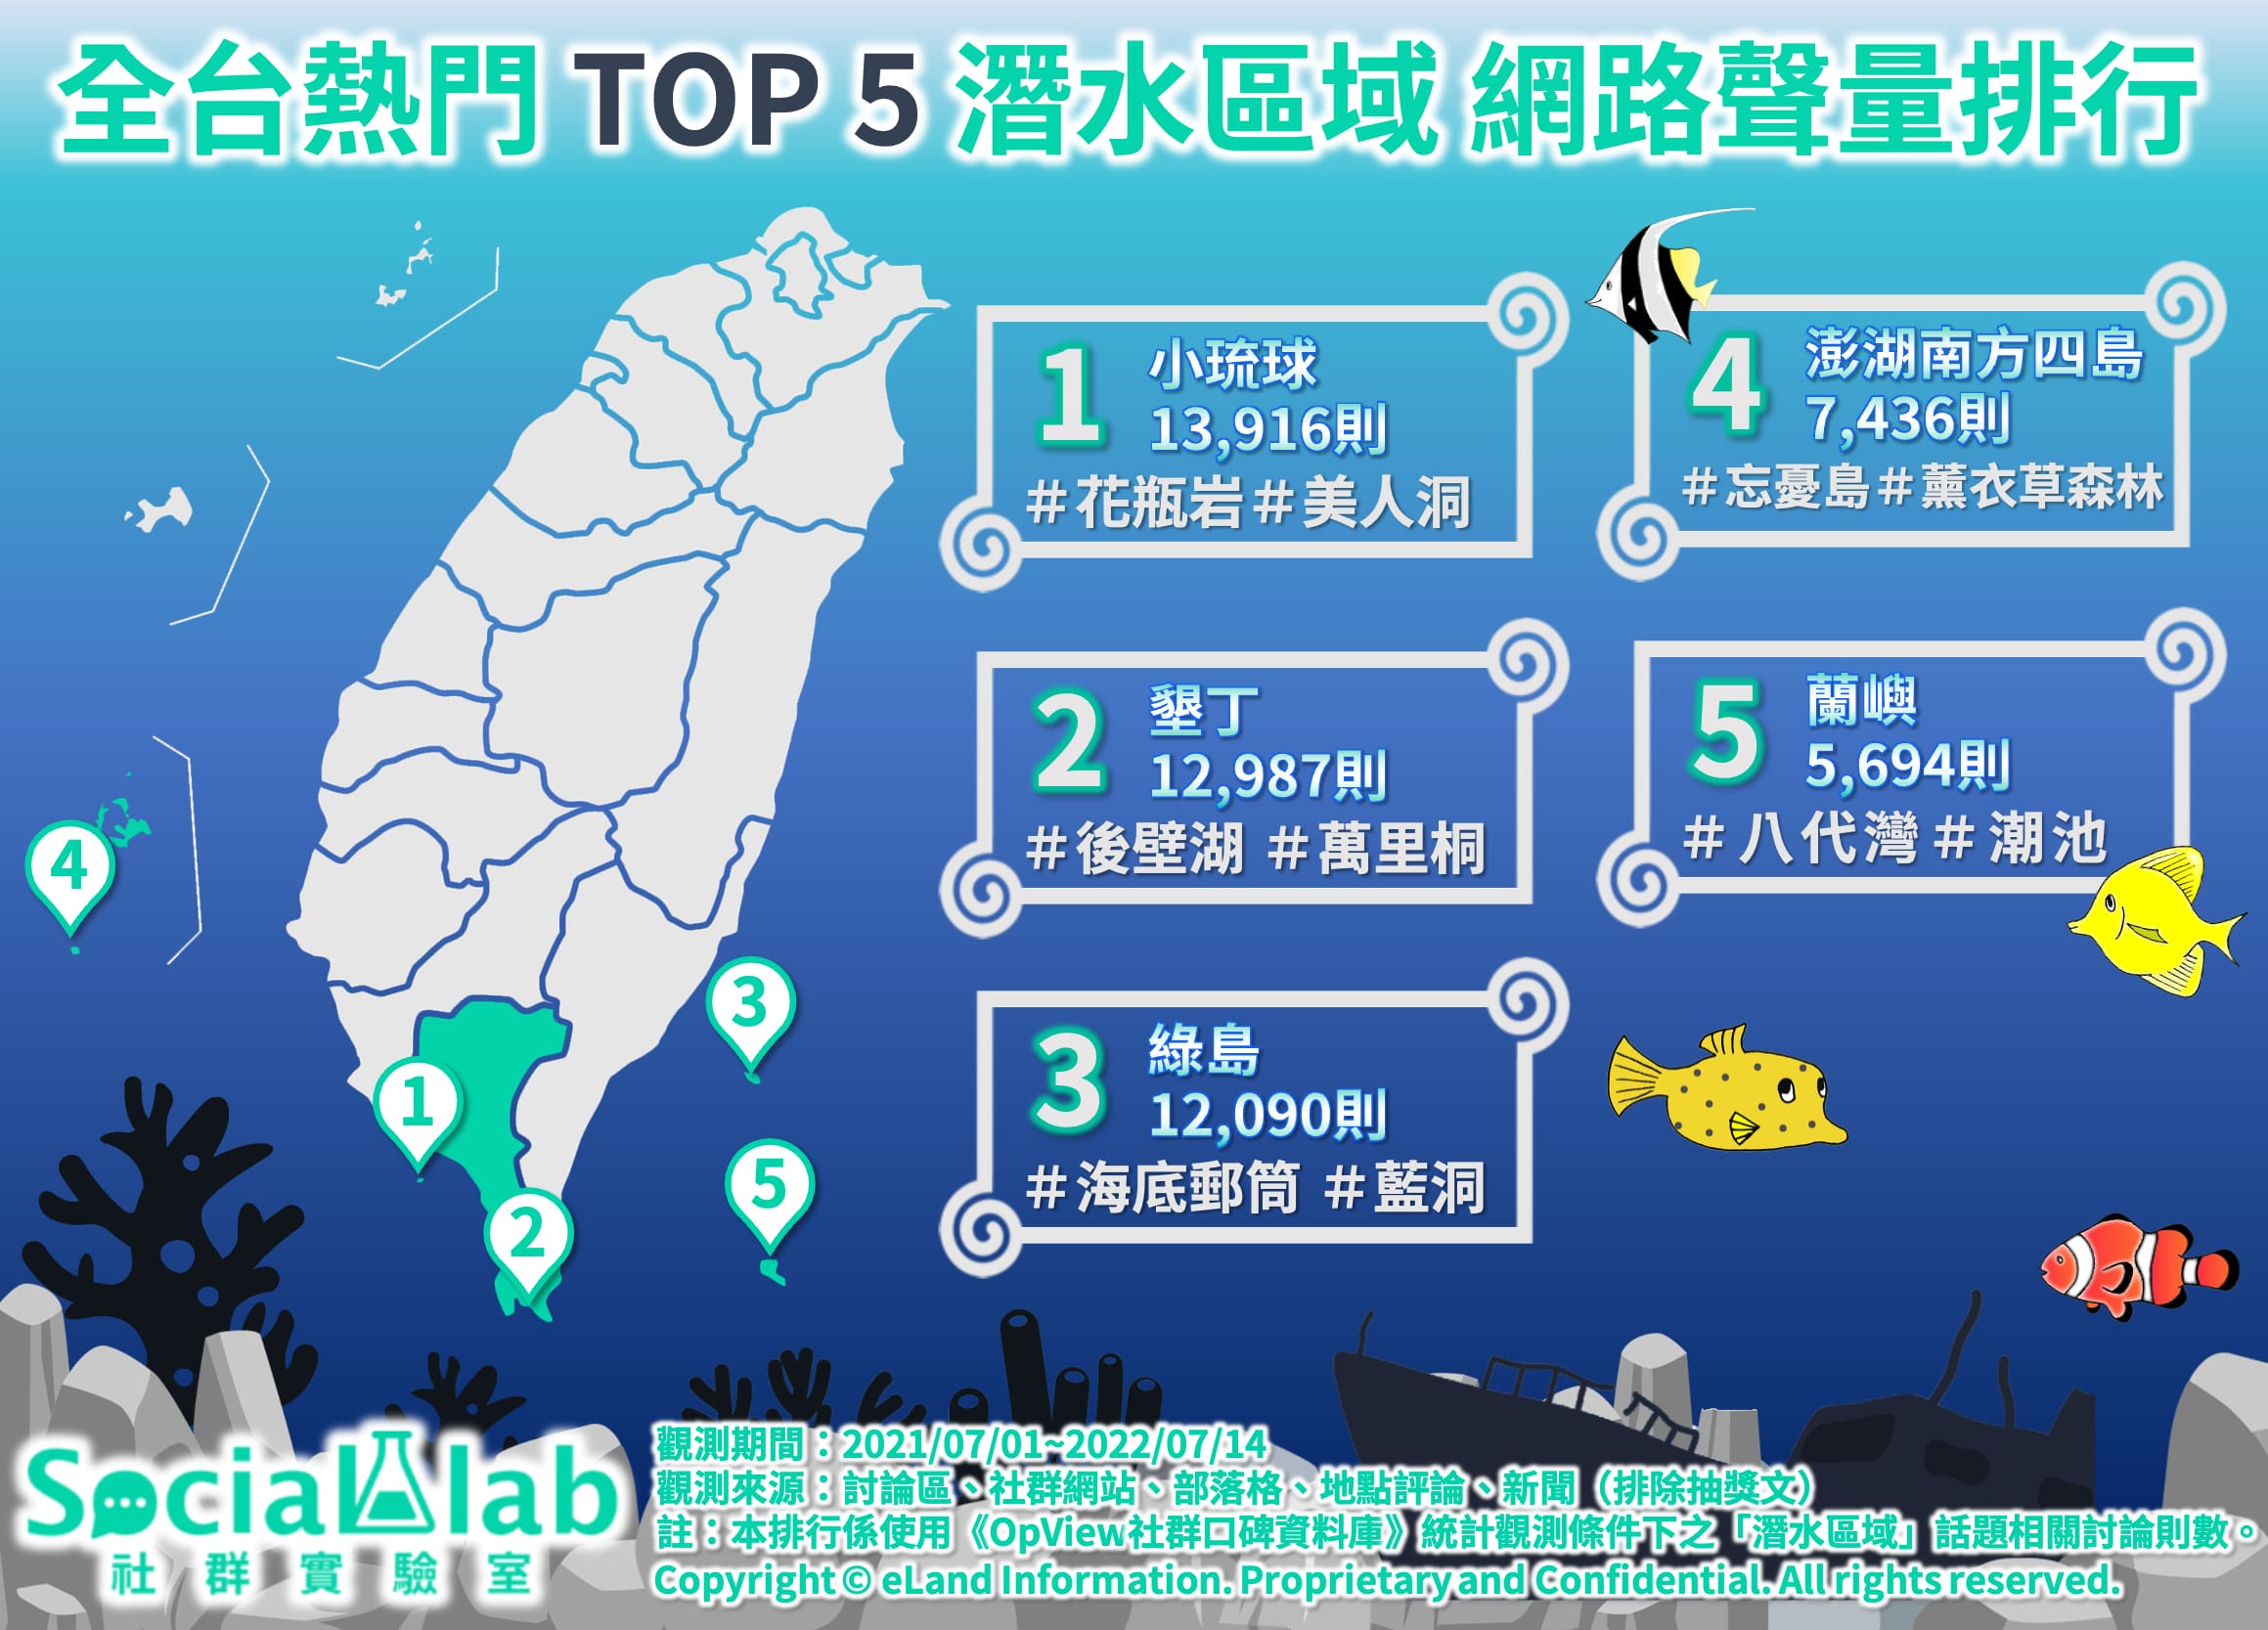 1 Top5潛水區域 網路聲量排行